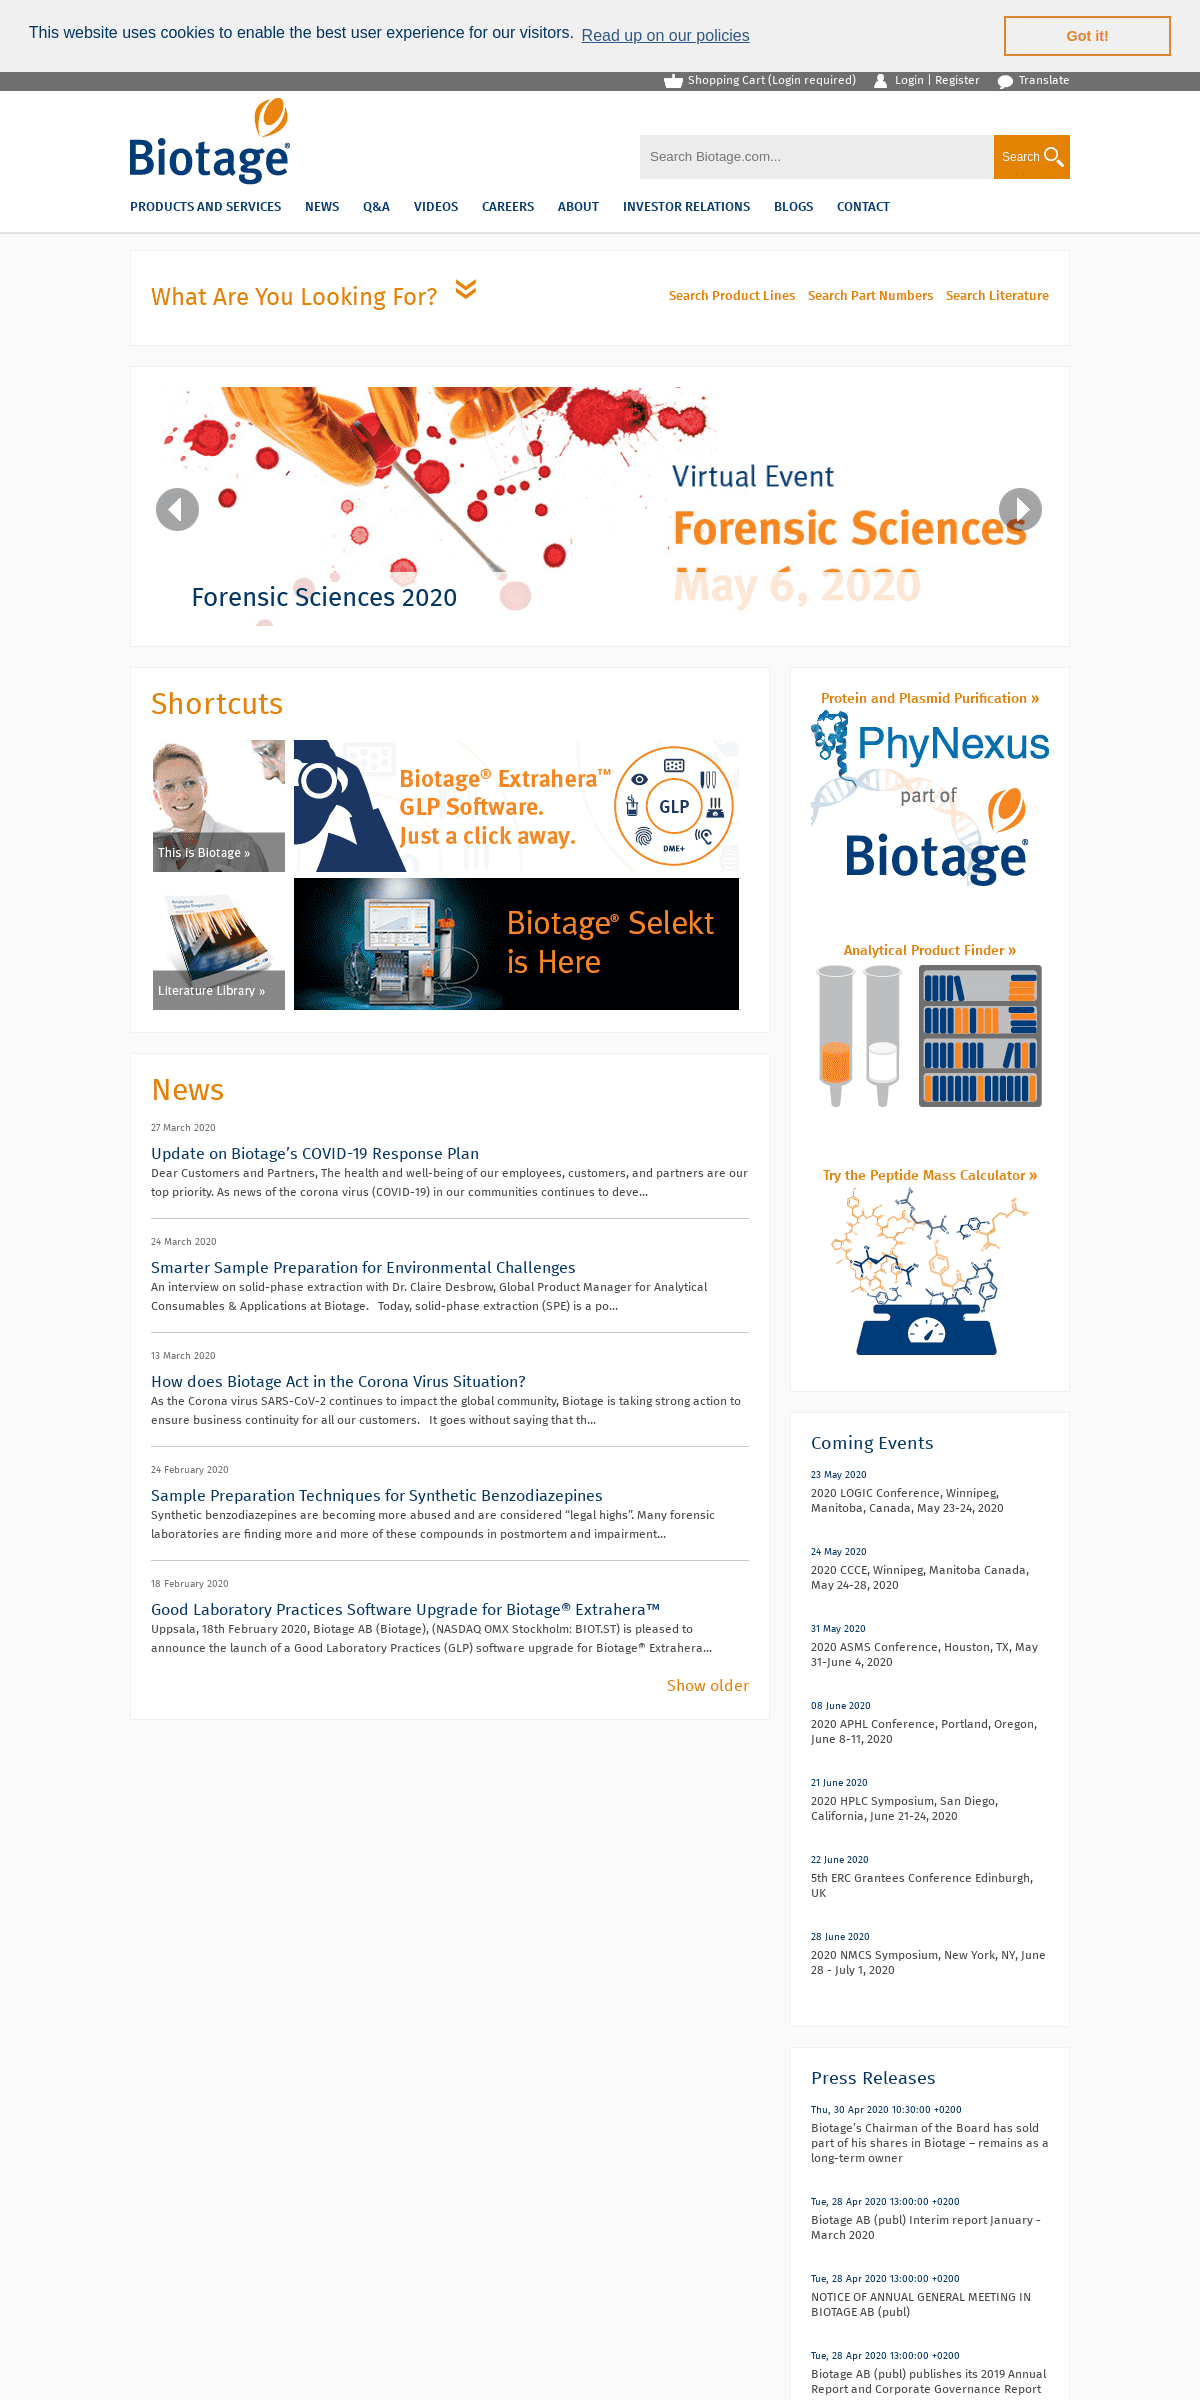 A complete backup of biotage.com